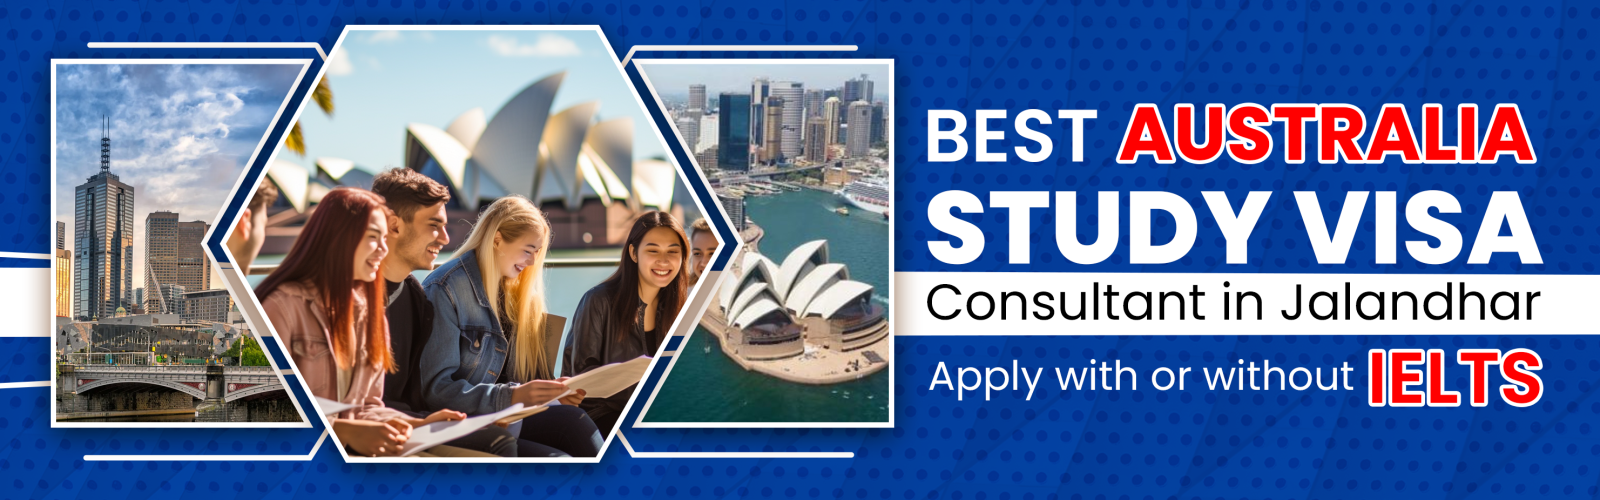 Australia Study visa Consultants